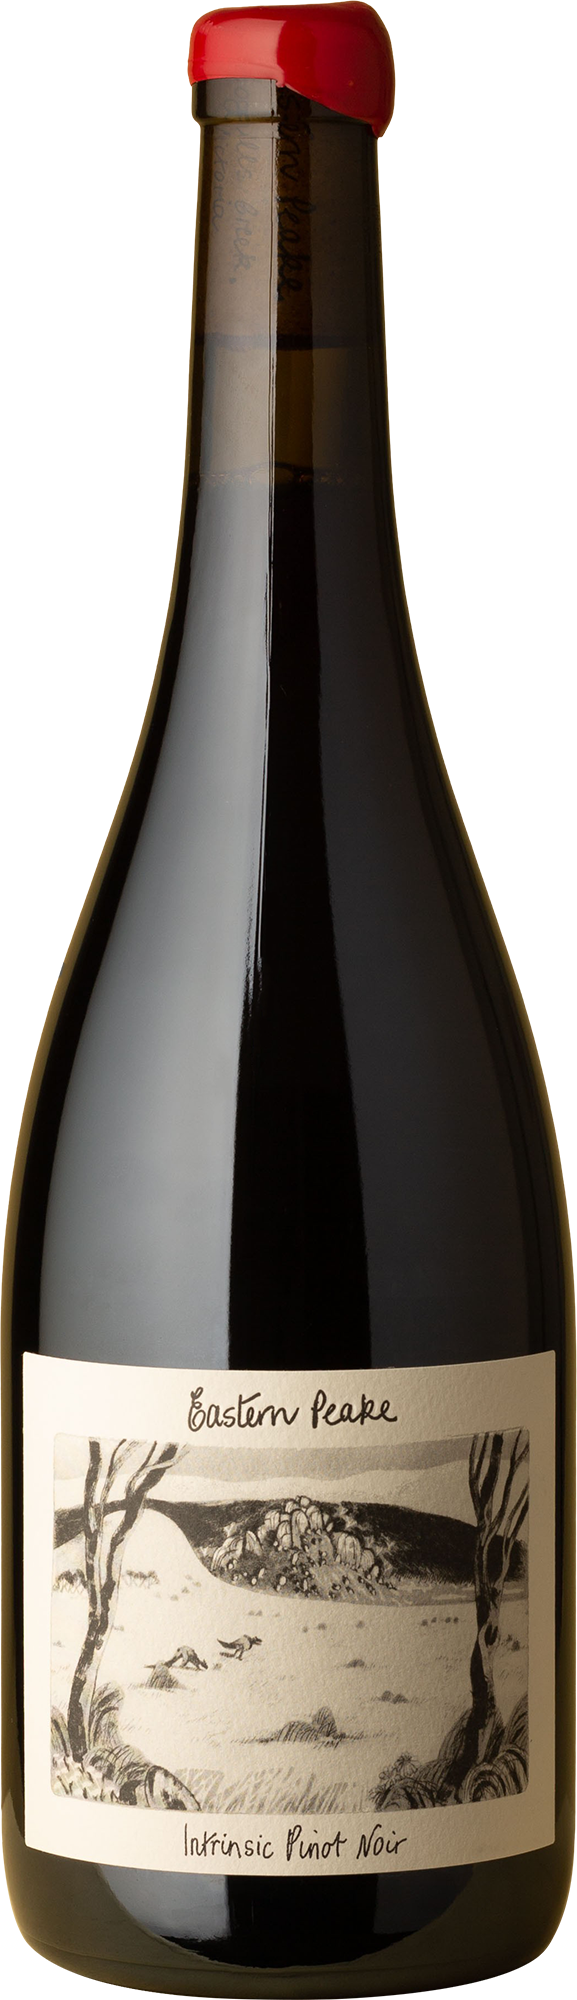 Eastern Peake - Intrinsic Pinot Noir 2020